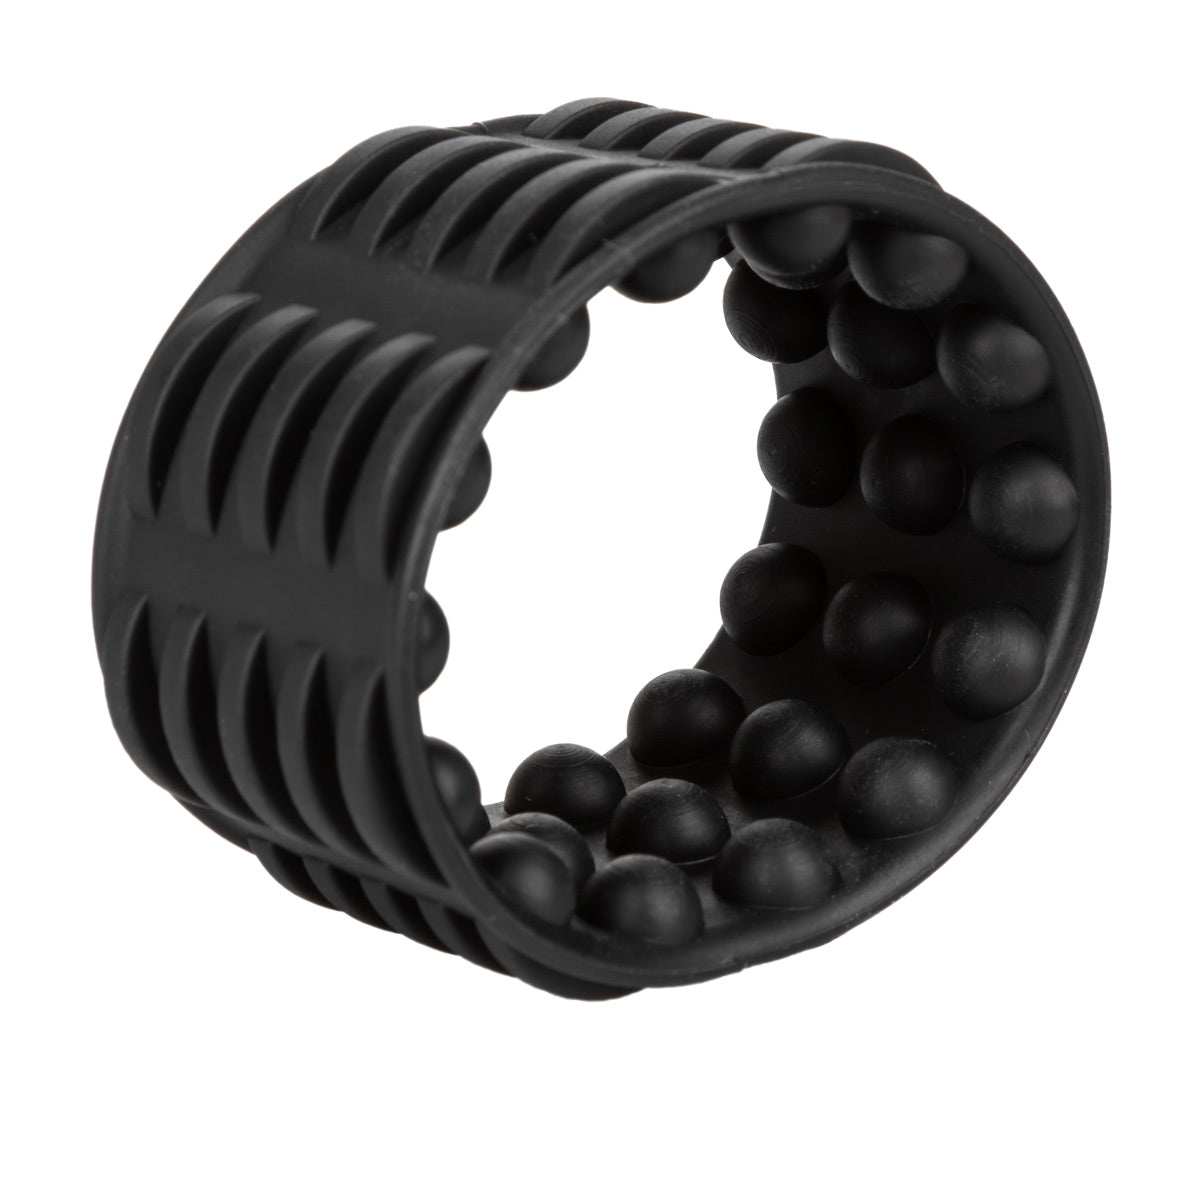 CalExotics - Silicone Reversible Ring - Black